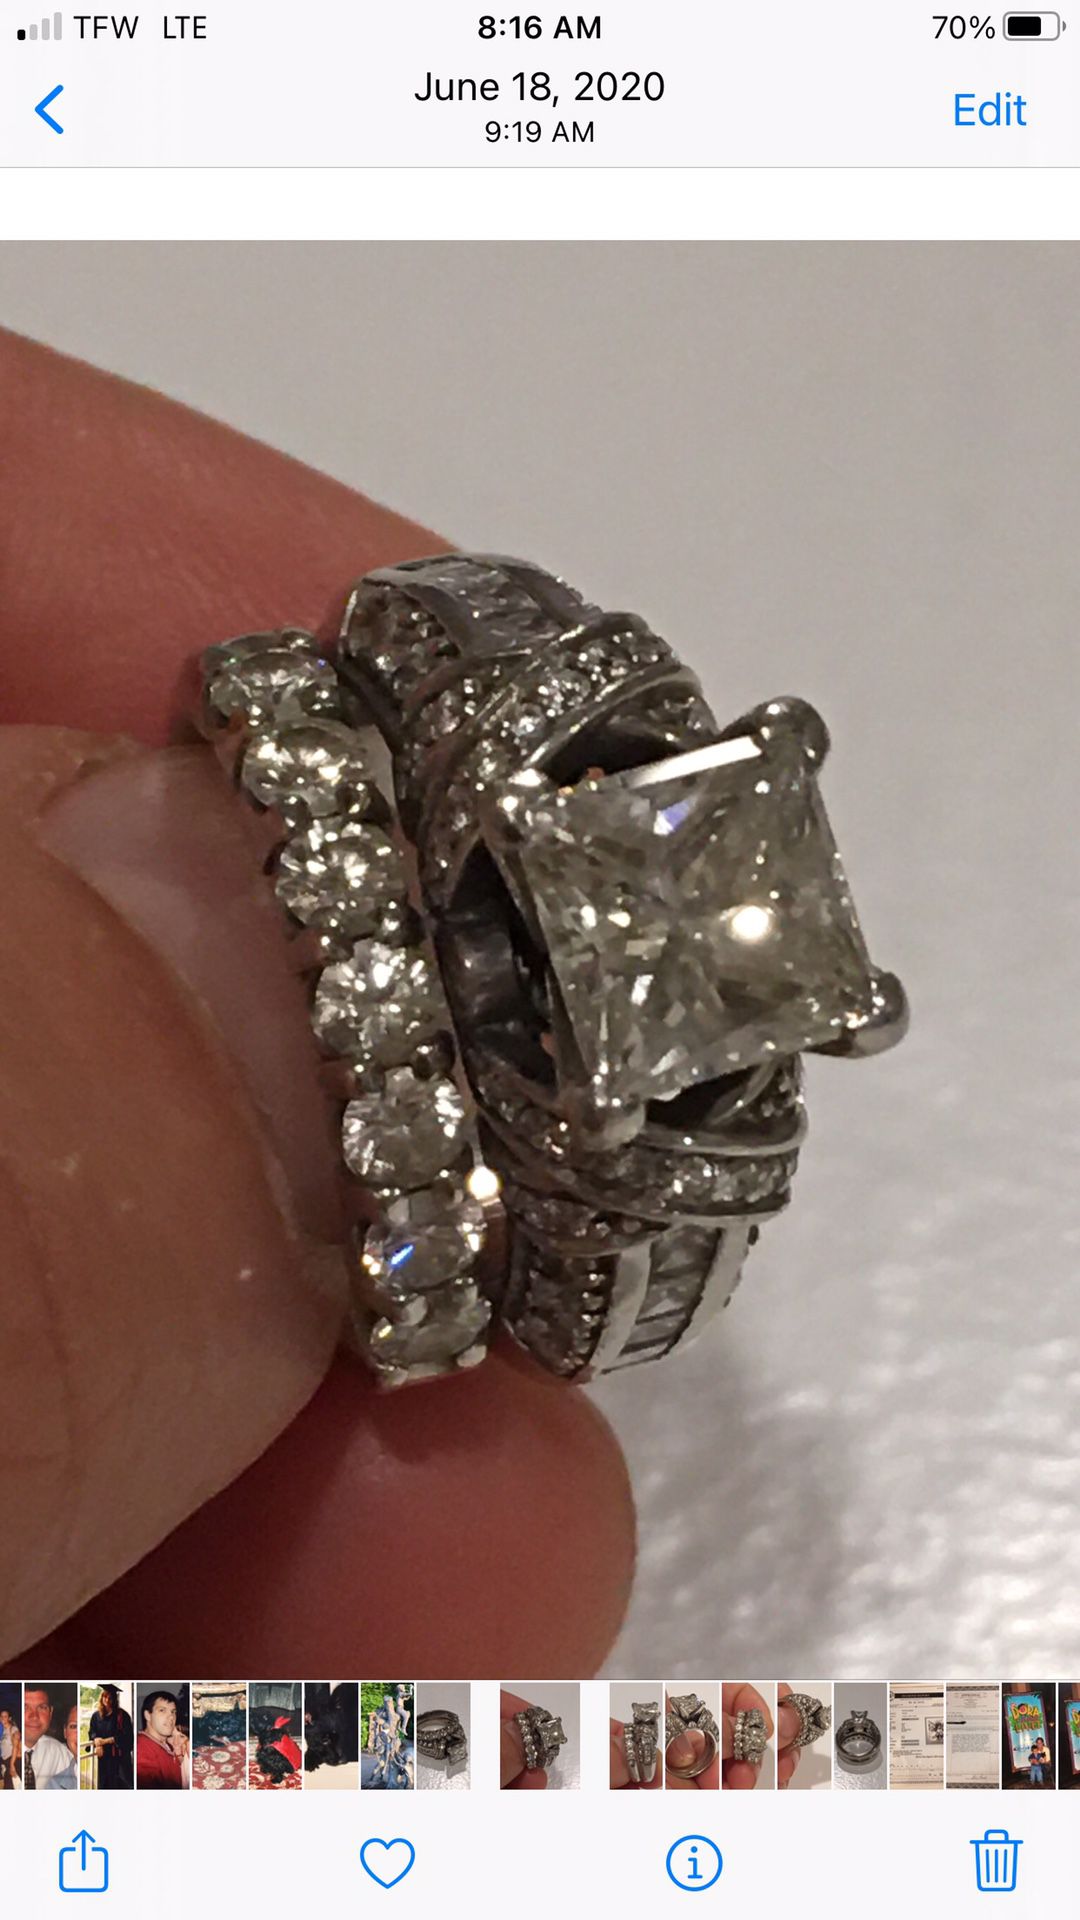 Diamond Engagement Ring and Wedding Band